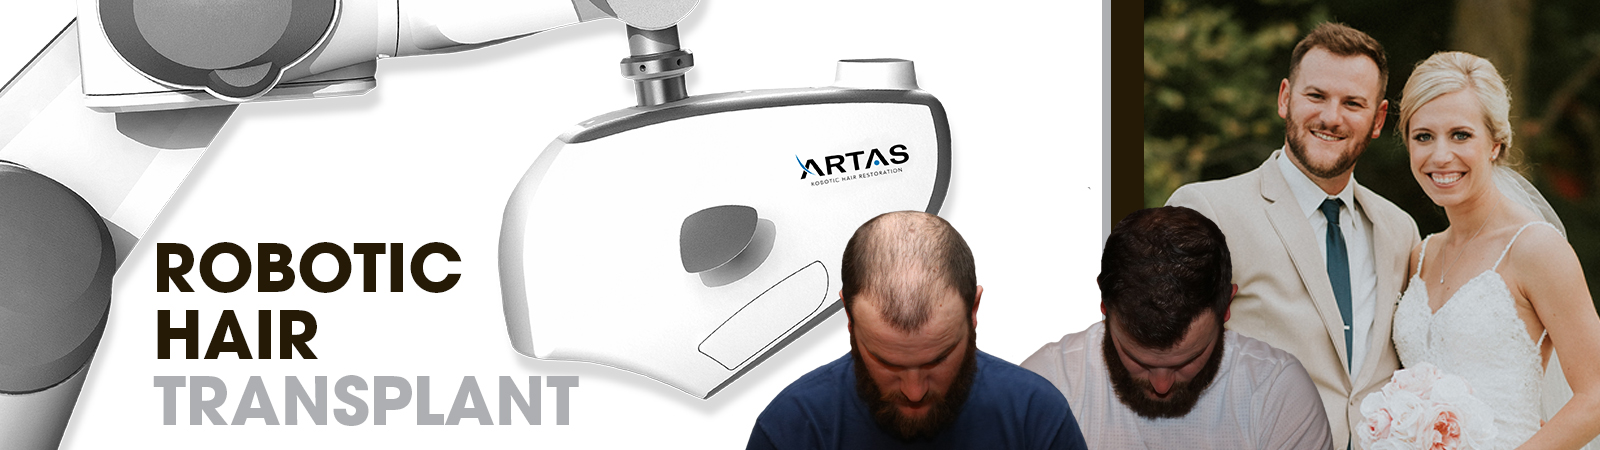 ARTAS Robotic Hair Transplant - JMISKO